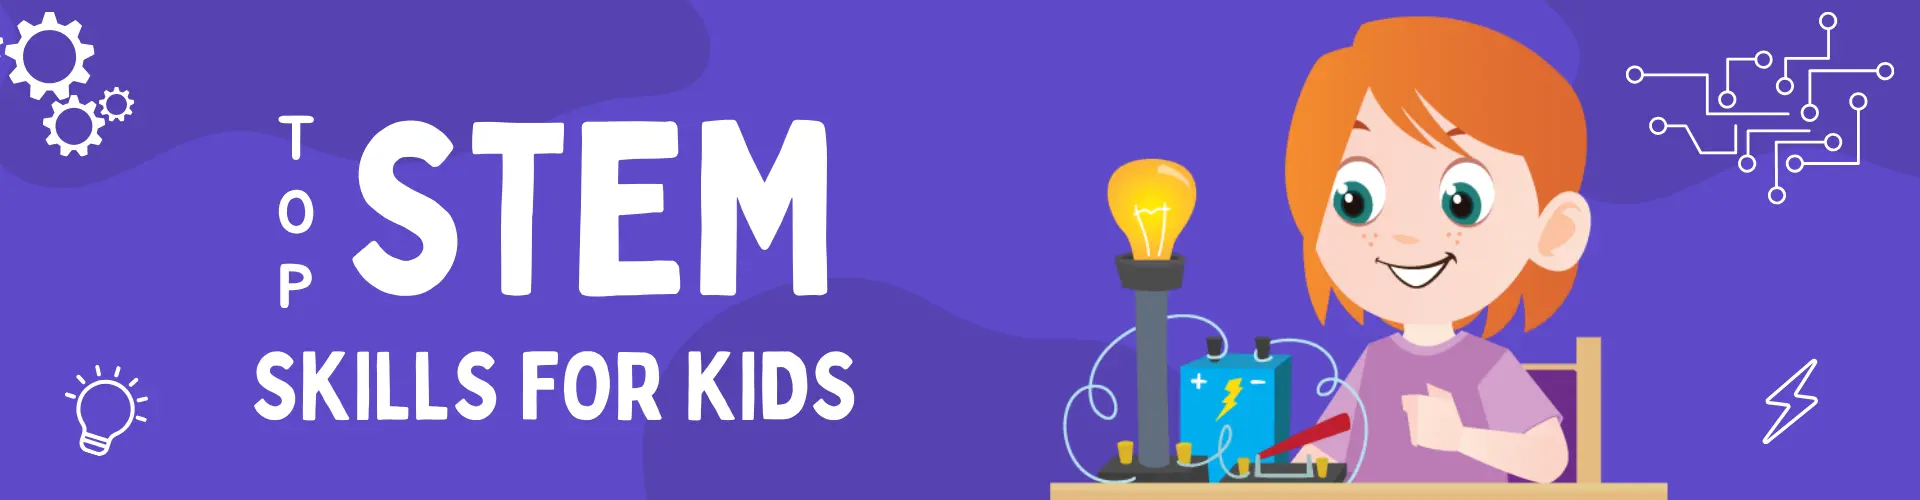 Top STEM Skills for Kids